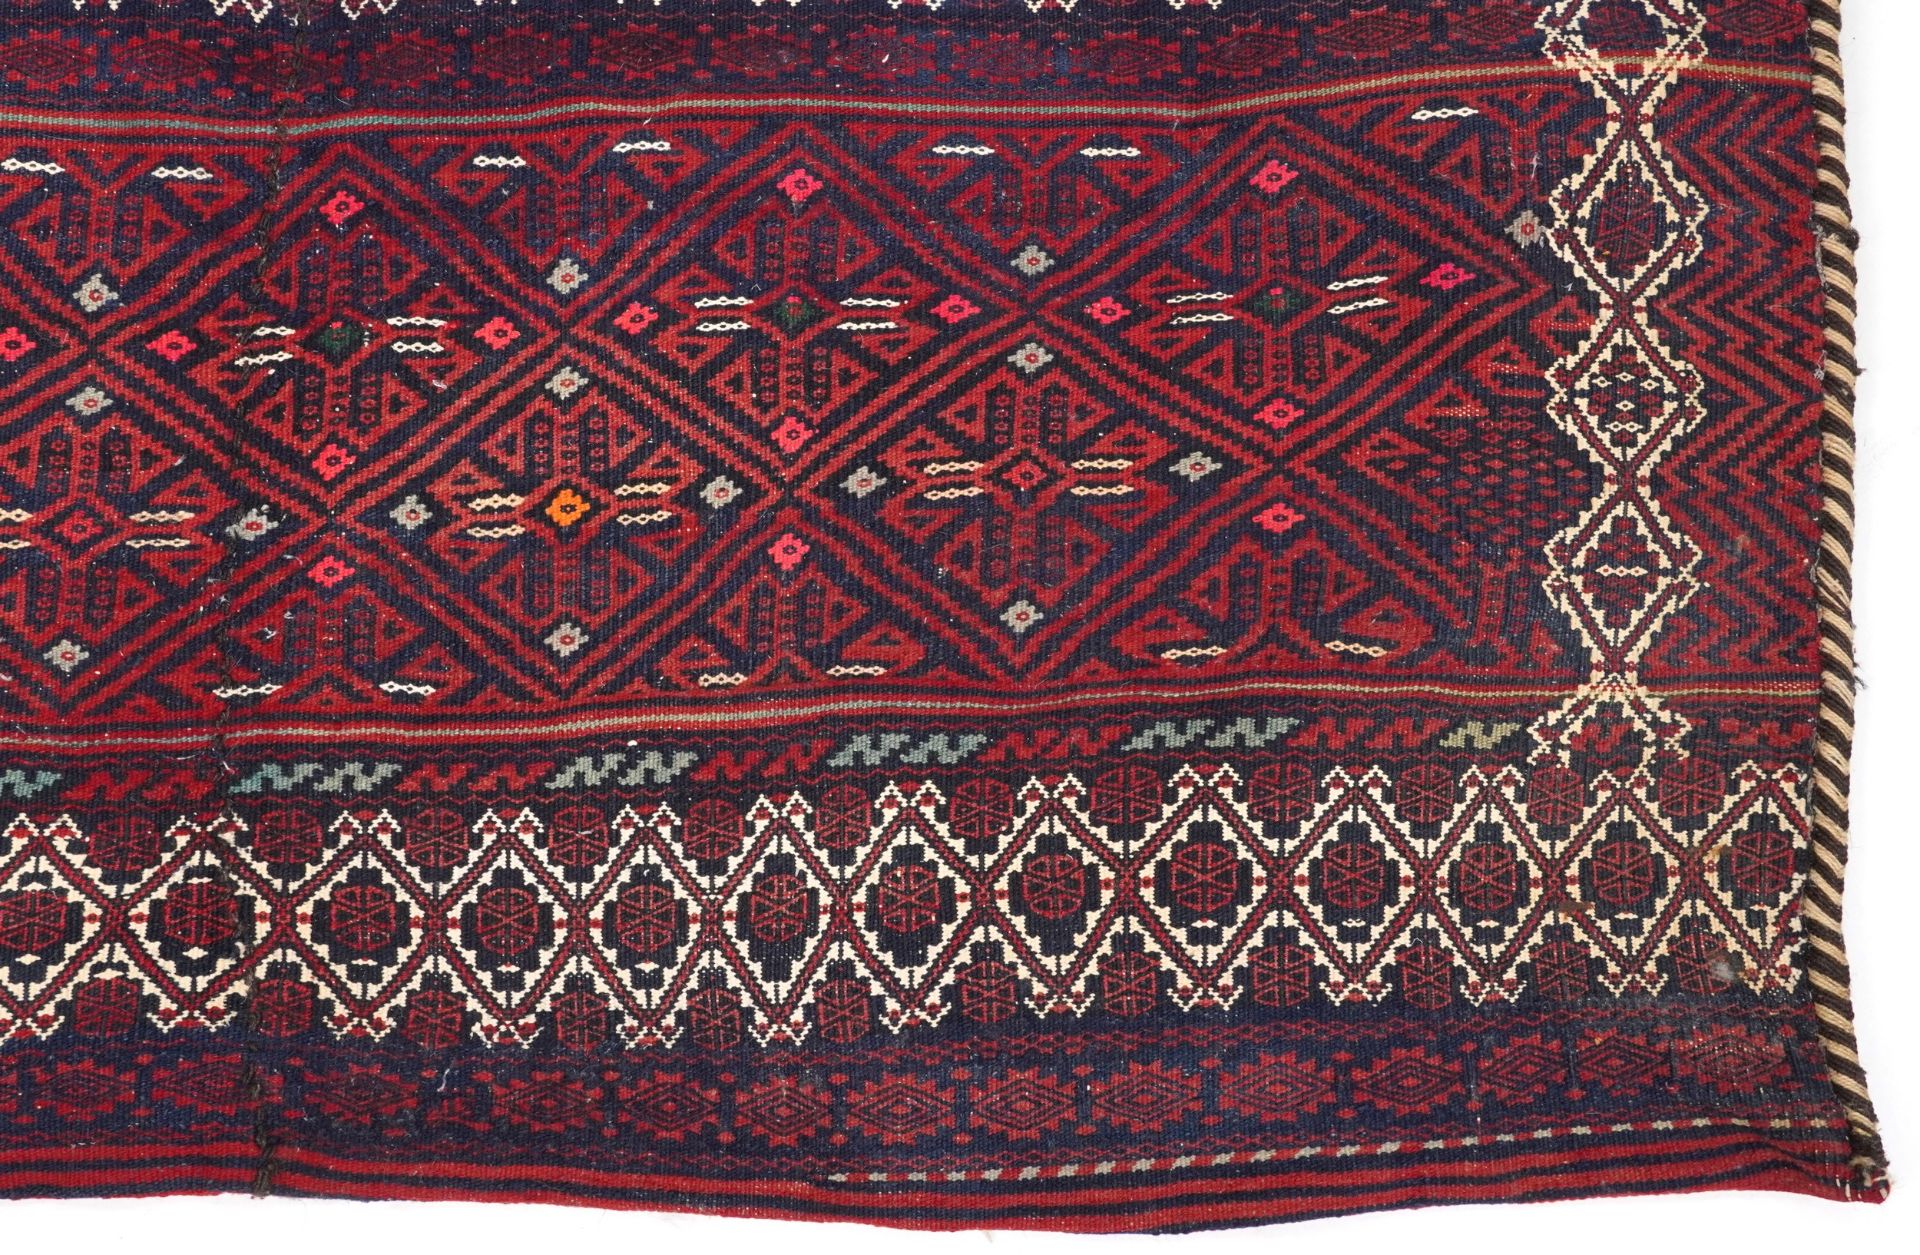 Rectangular Afghan red ground saddle bag having an allover repeat design, 150cm x 80cm - Image 5 of 7